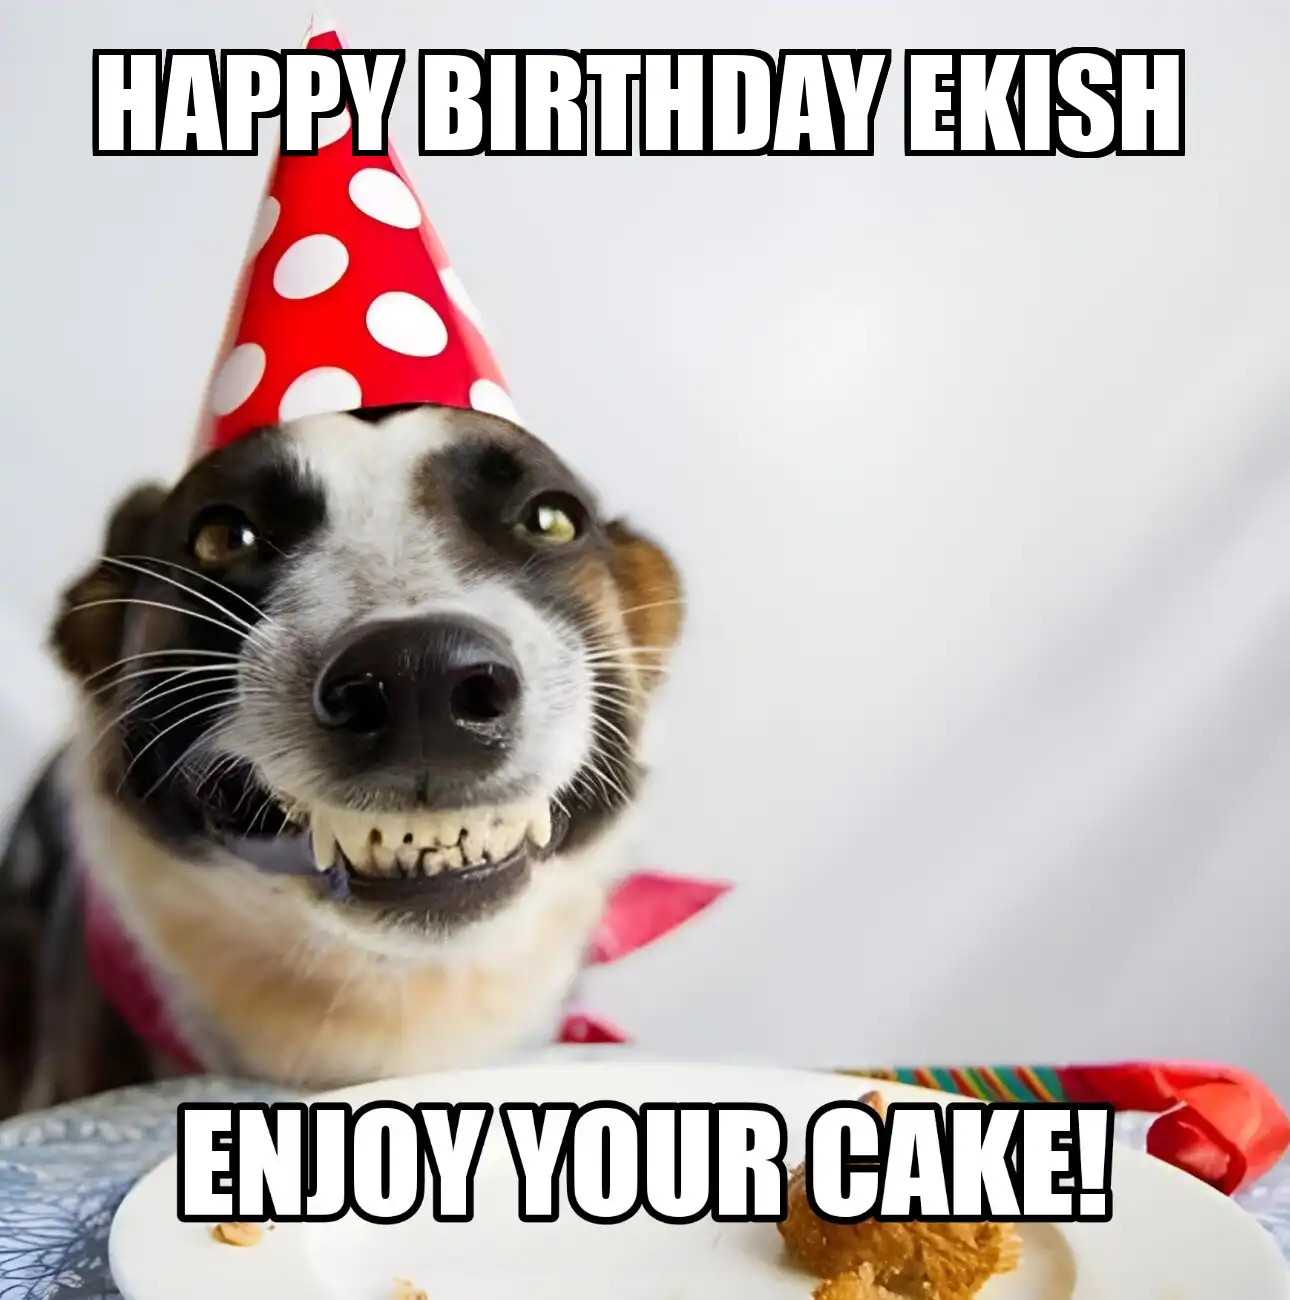 Happy Birthday Ekish Enjoy Your Cake Dog Meme